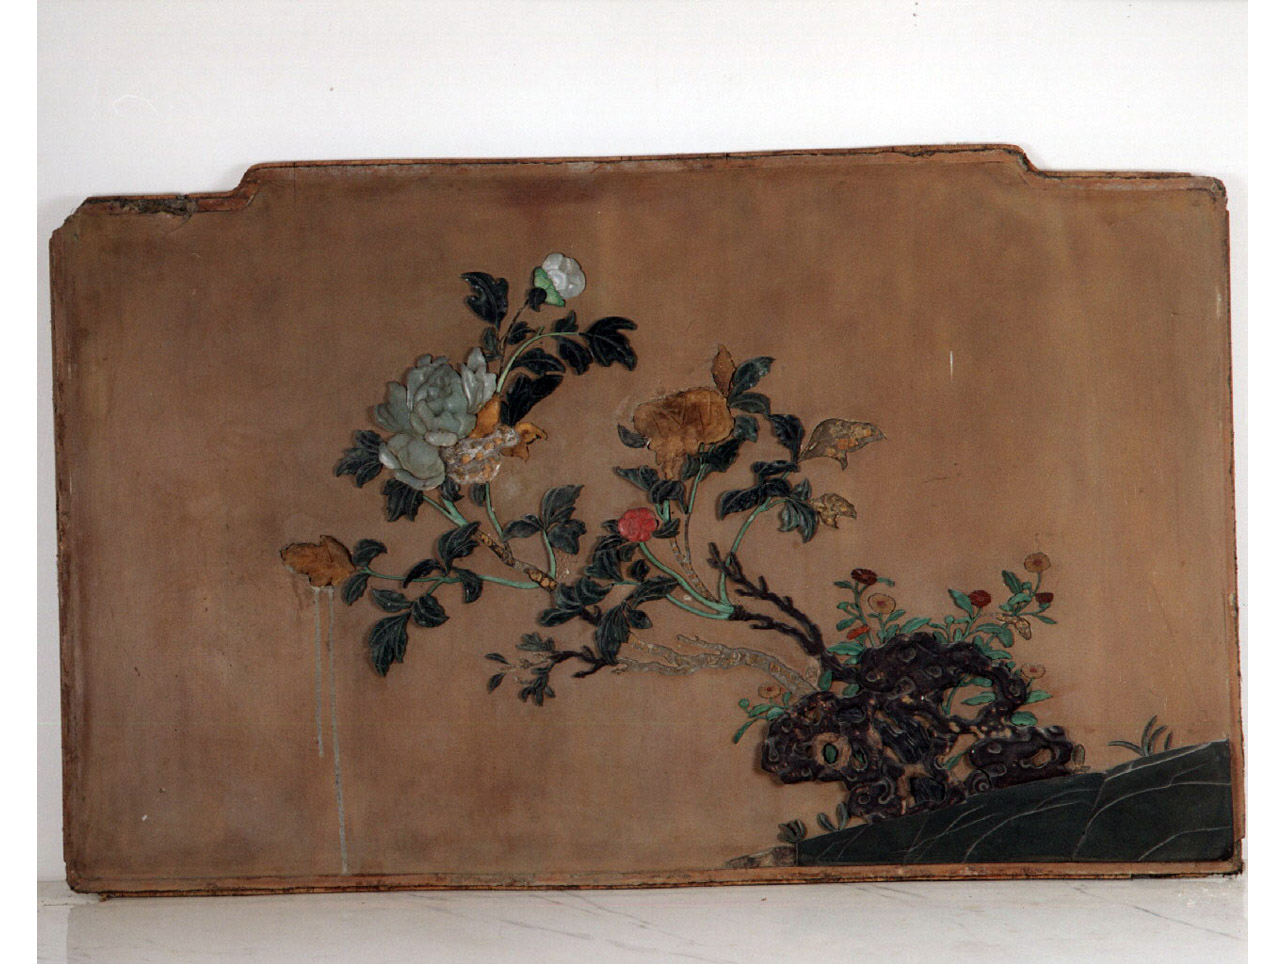 motivi decorativi vegetali (pannello) - manifattura cinese (sec. XVIII)